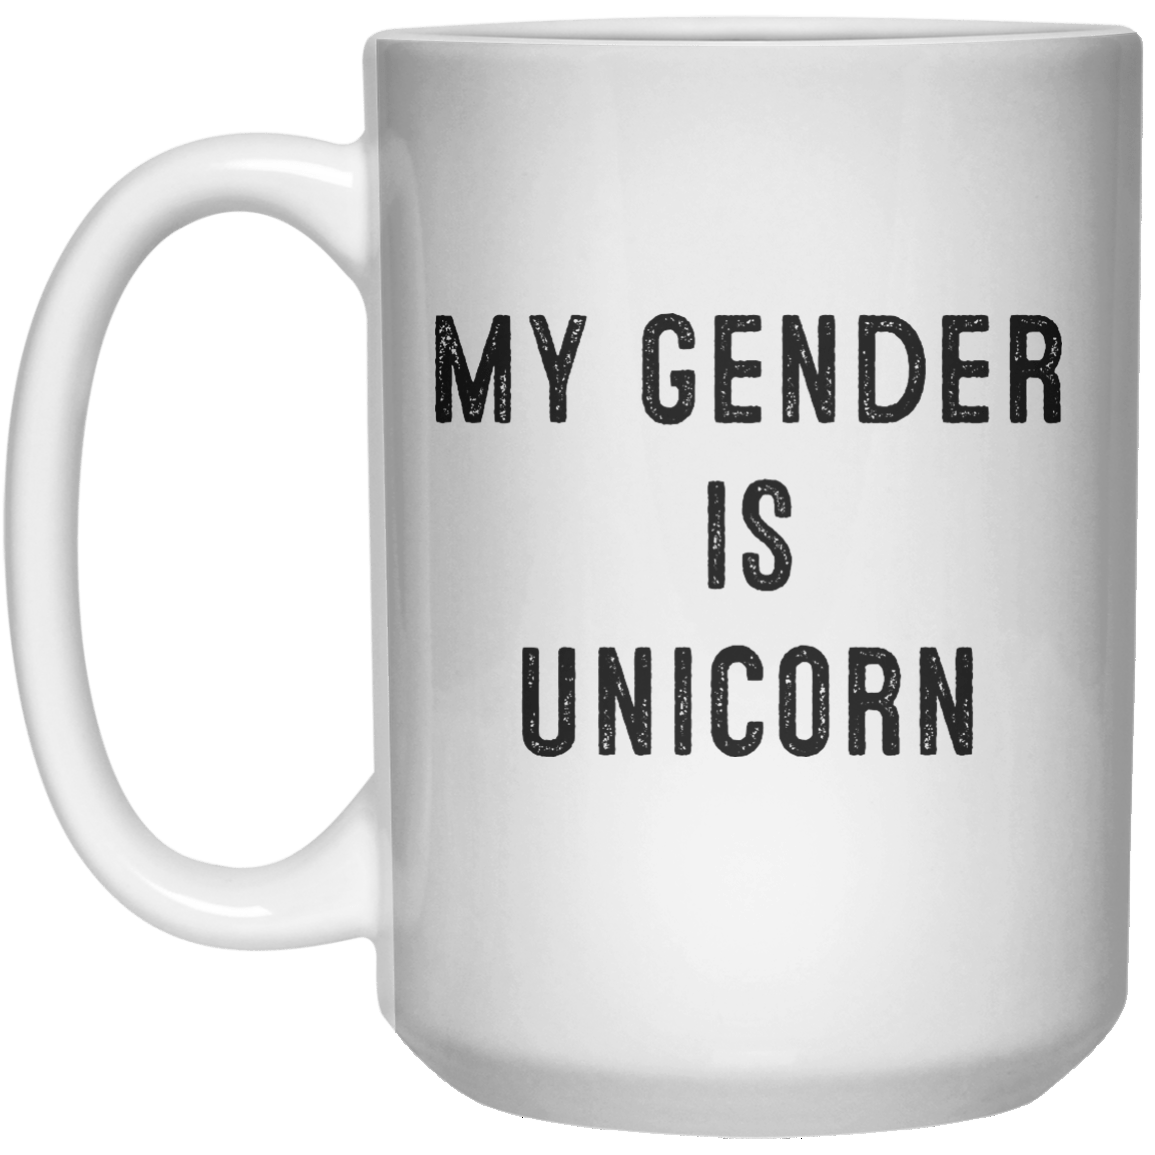 My Gender is Unicorn MUG  Mug - 15oz - Shirtoopia